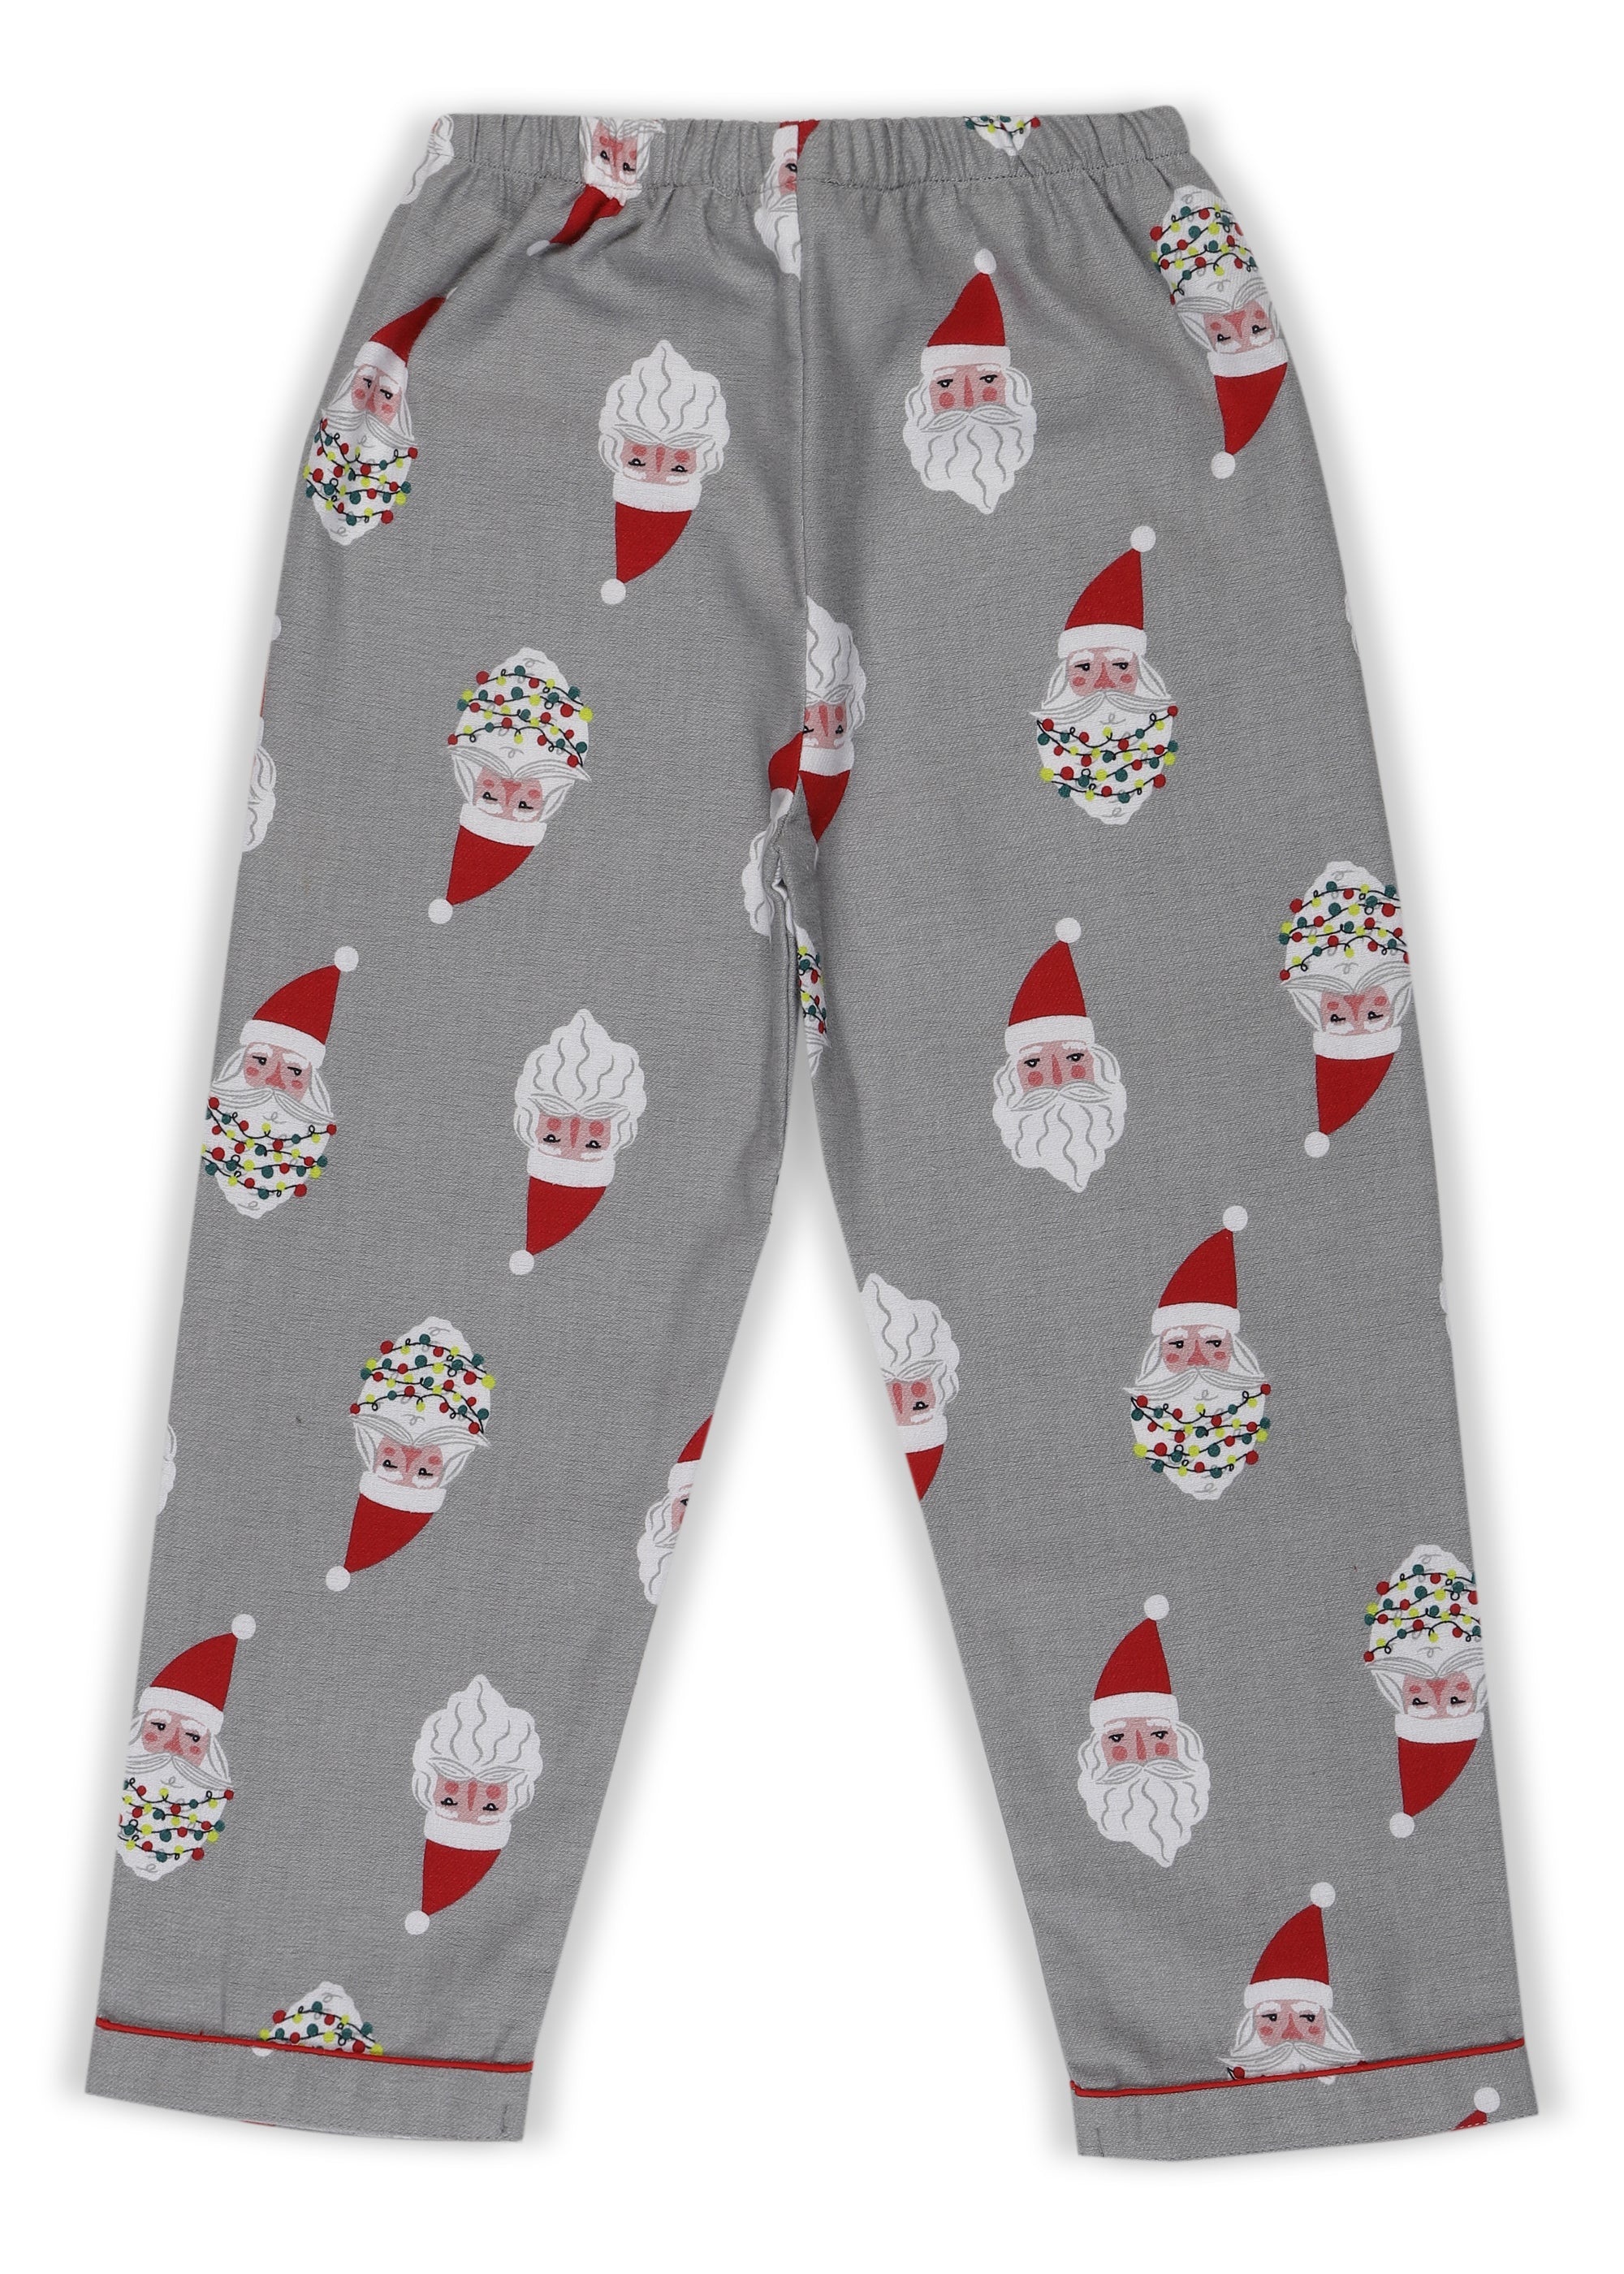 Santa Cutie Print Cotton Flannel Long Sleeve Kid's Night Suit